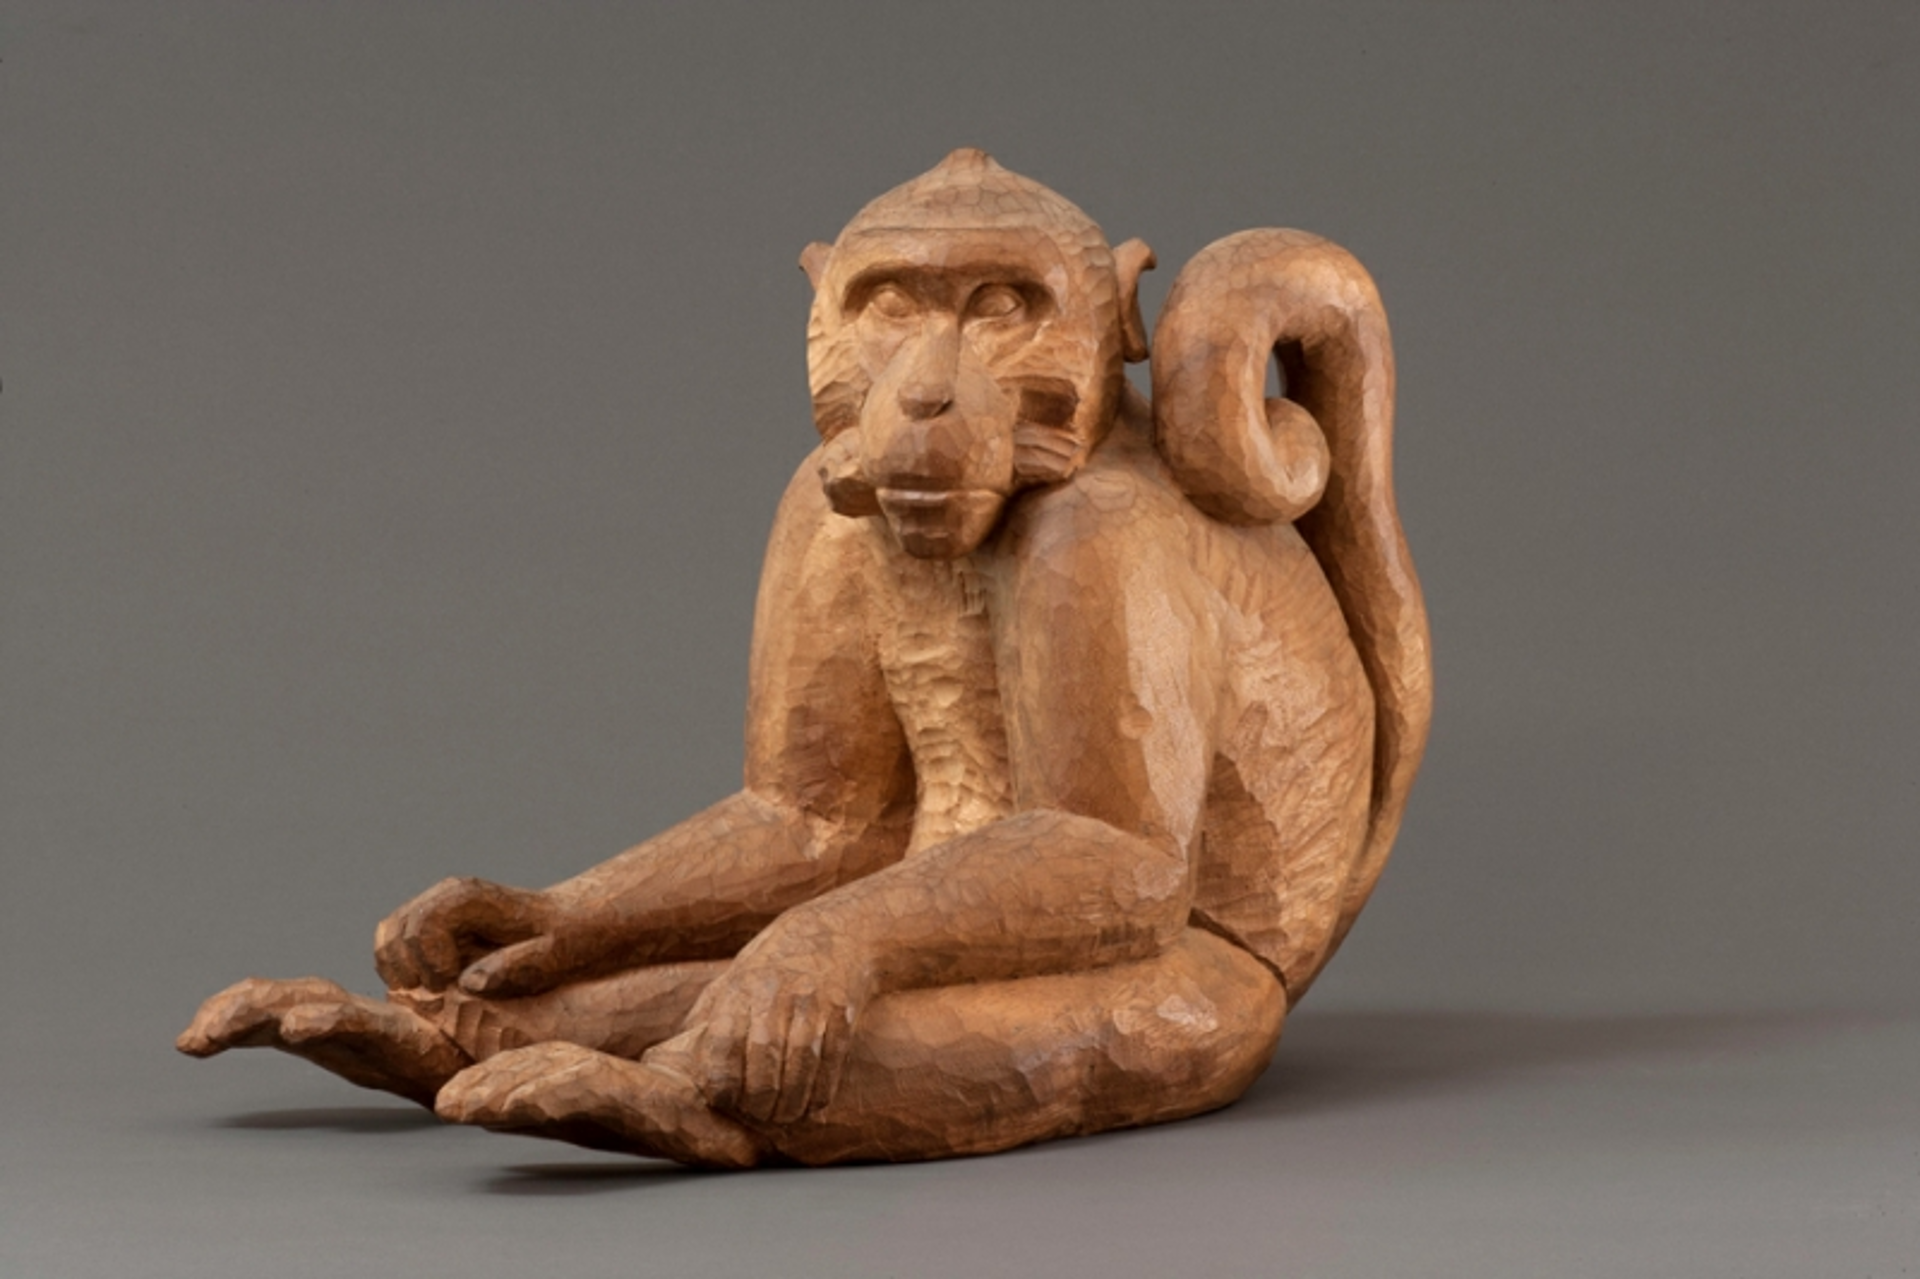 Monkey by Elaine Hanowell